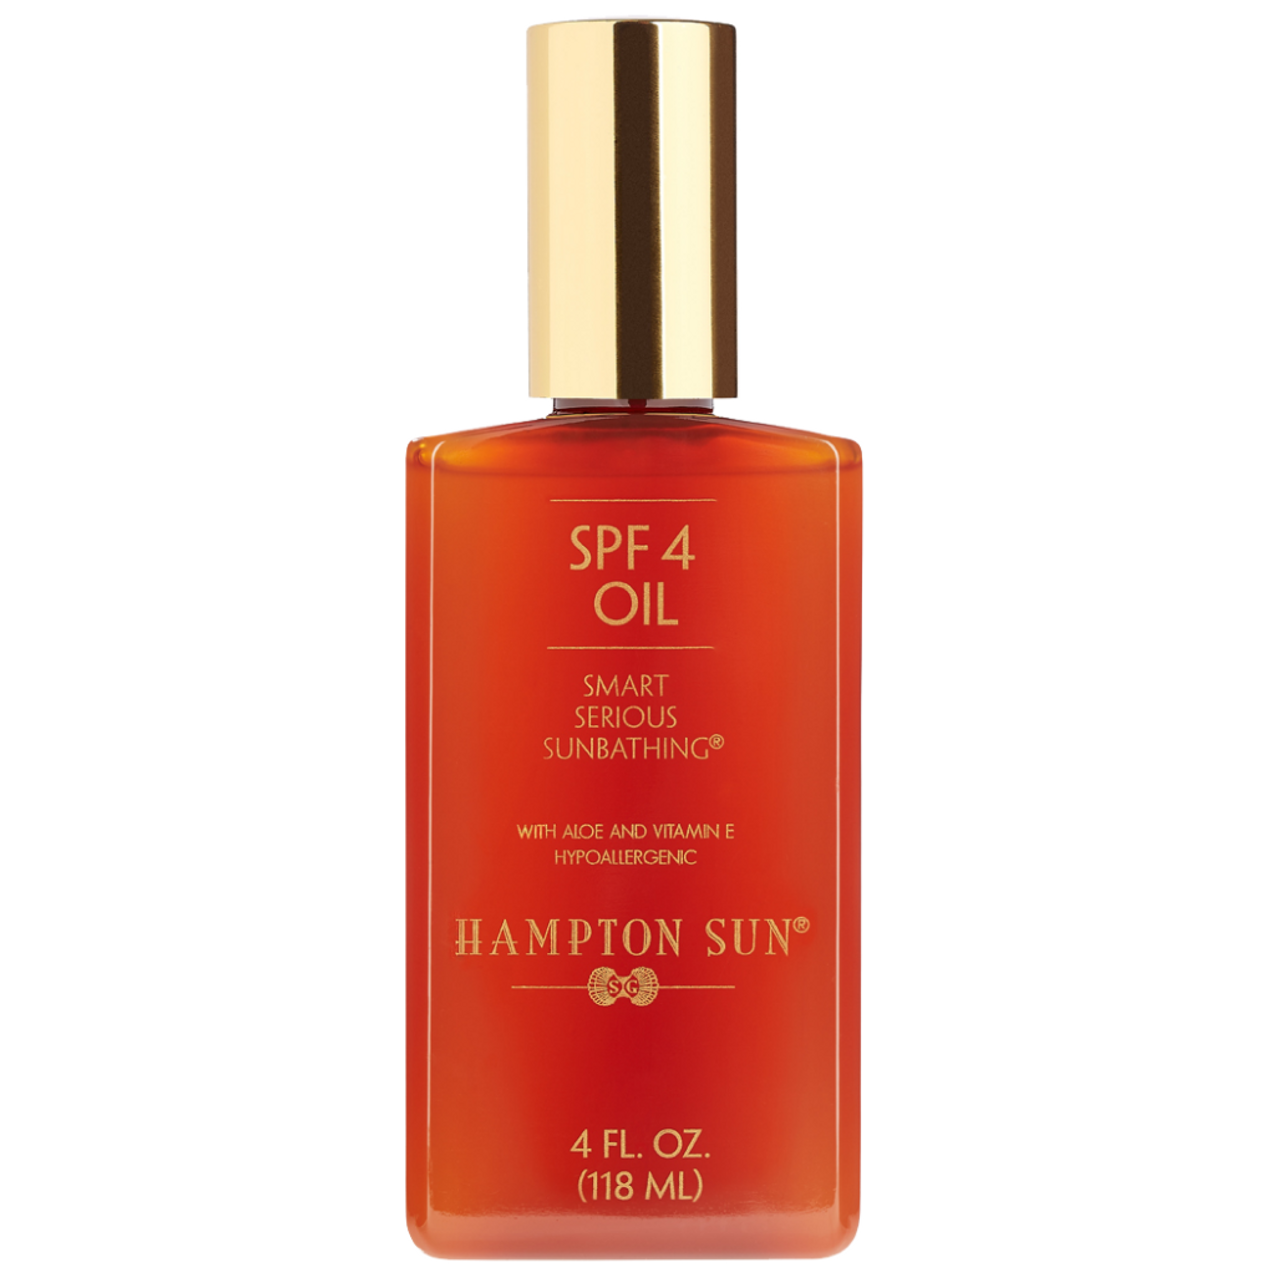 Hampton Sun SPF 4 Oil